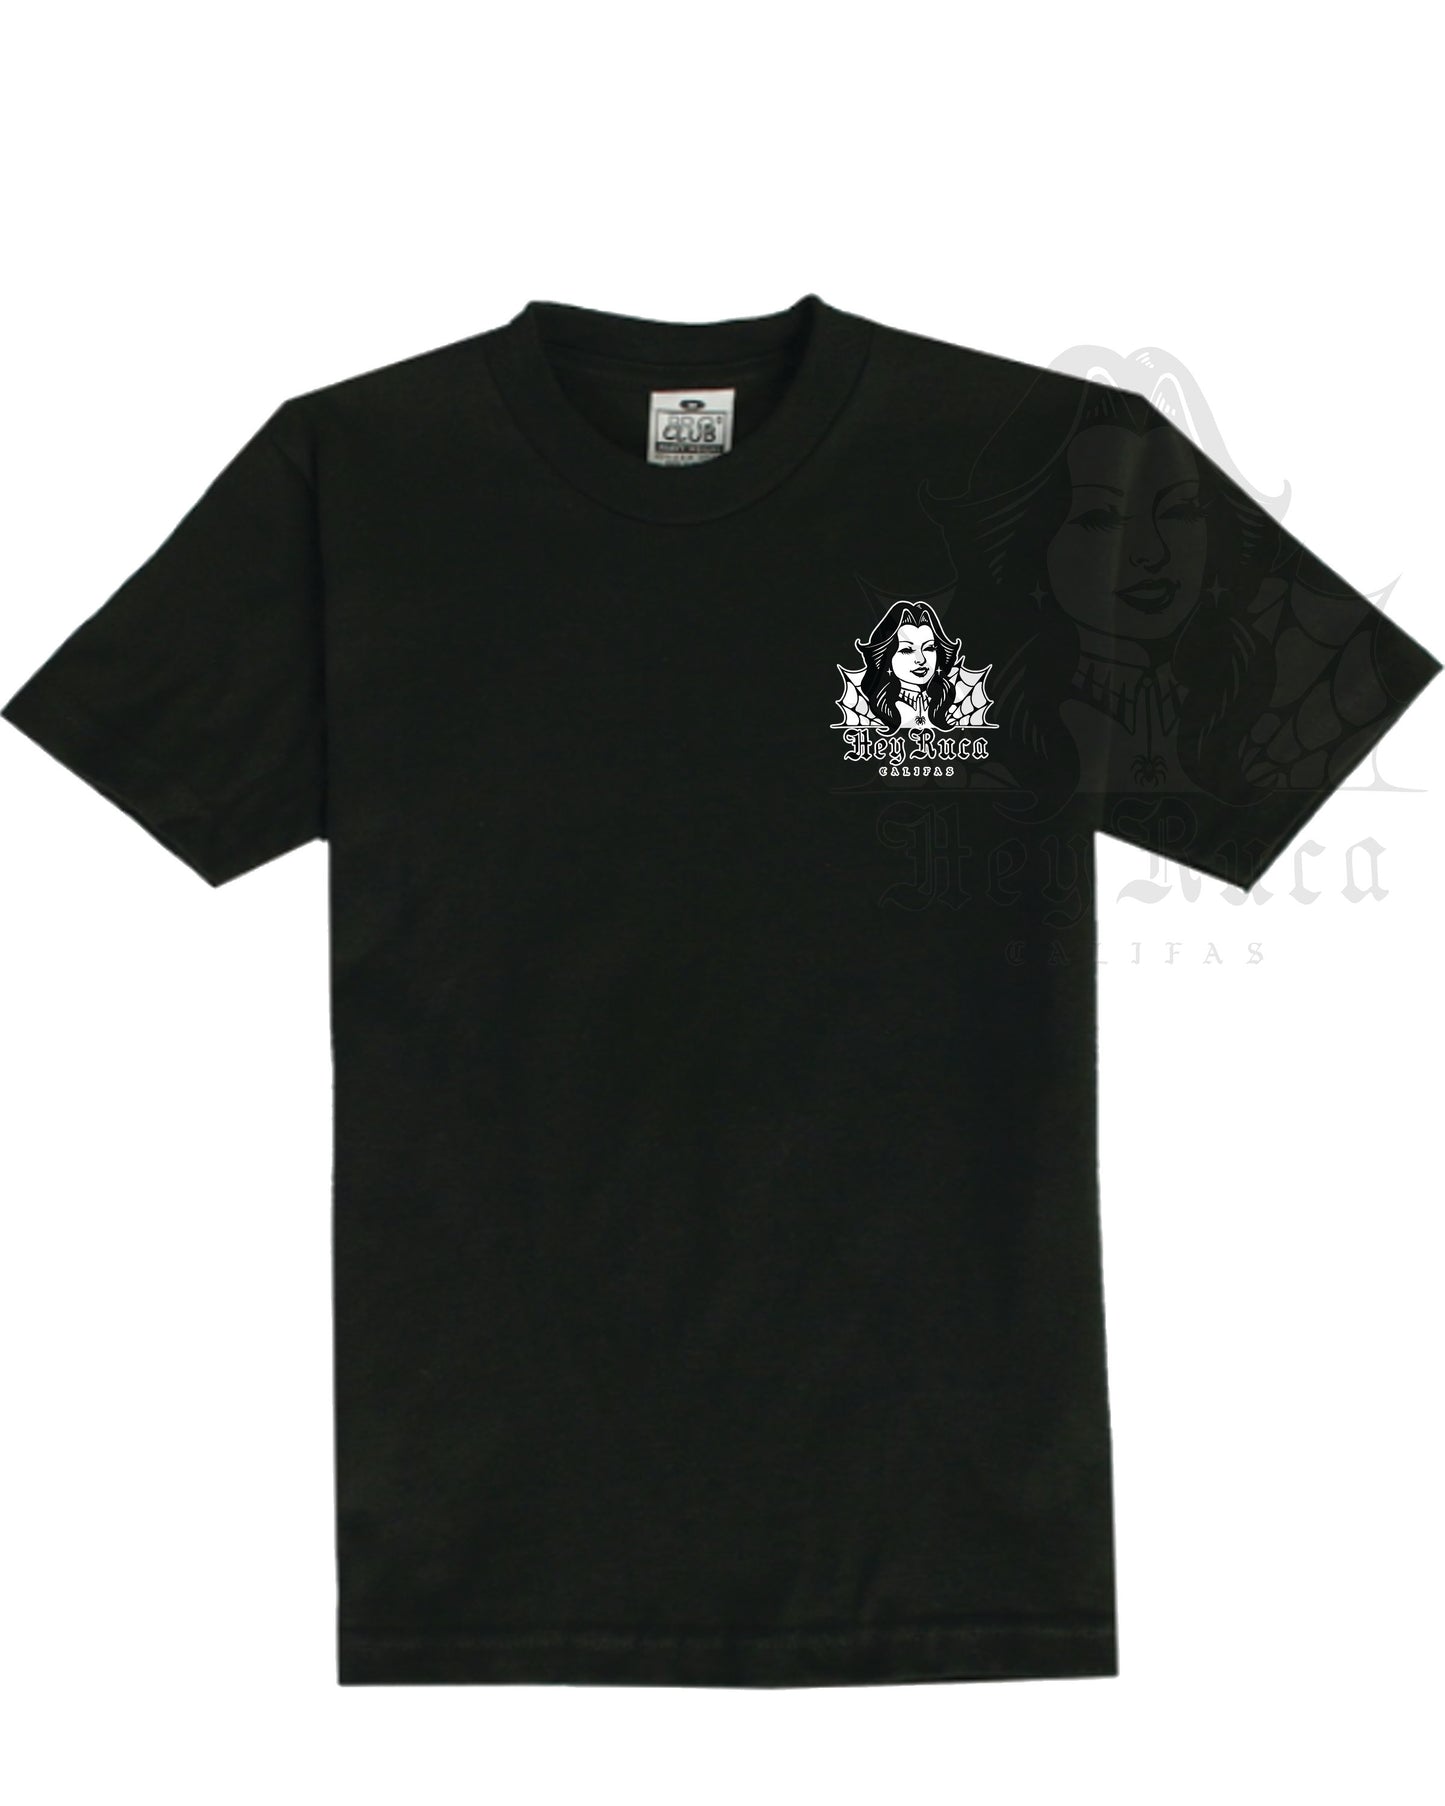 Charra Unisex Black T-shirt